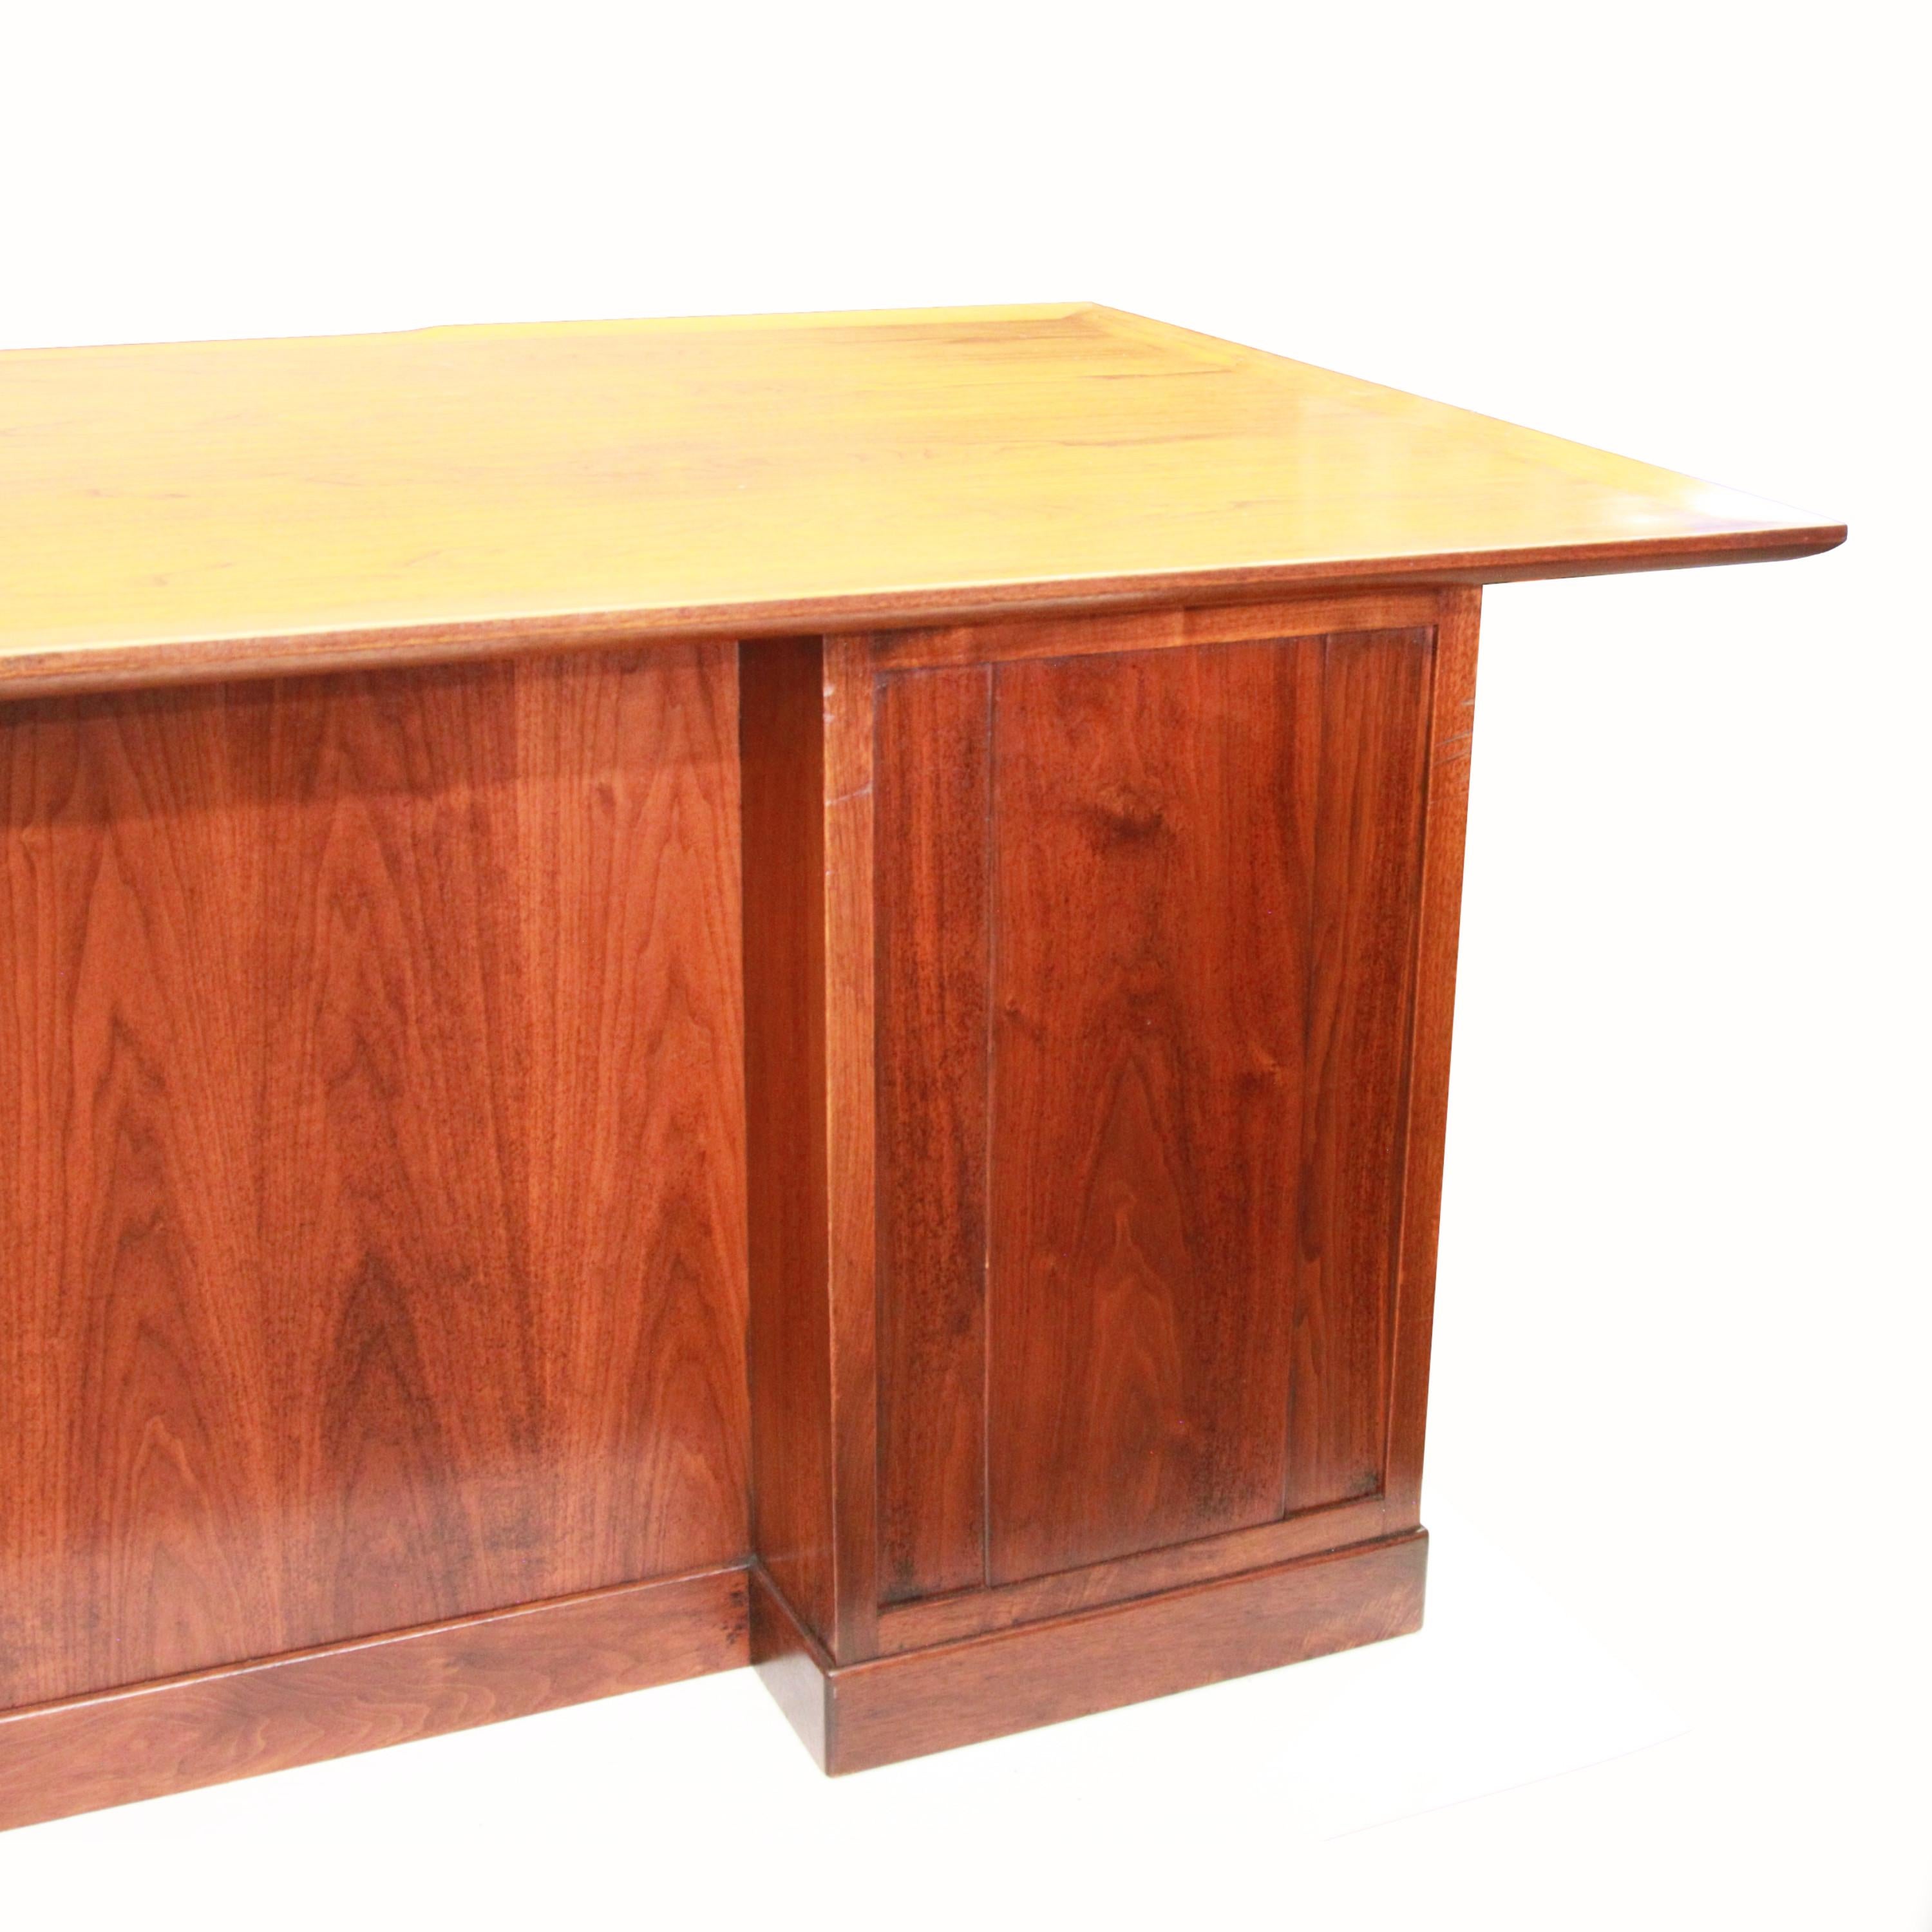 1950s Mid-Century Modern Walnut Executive Desk by Edward Wormley for Dunbar For Sale 1